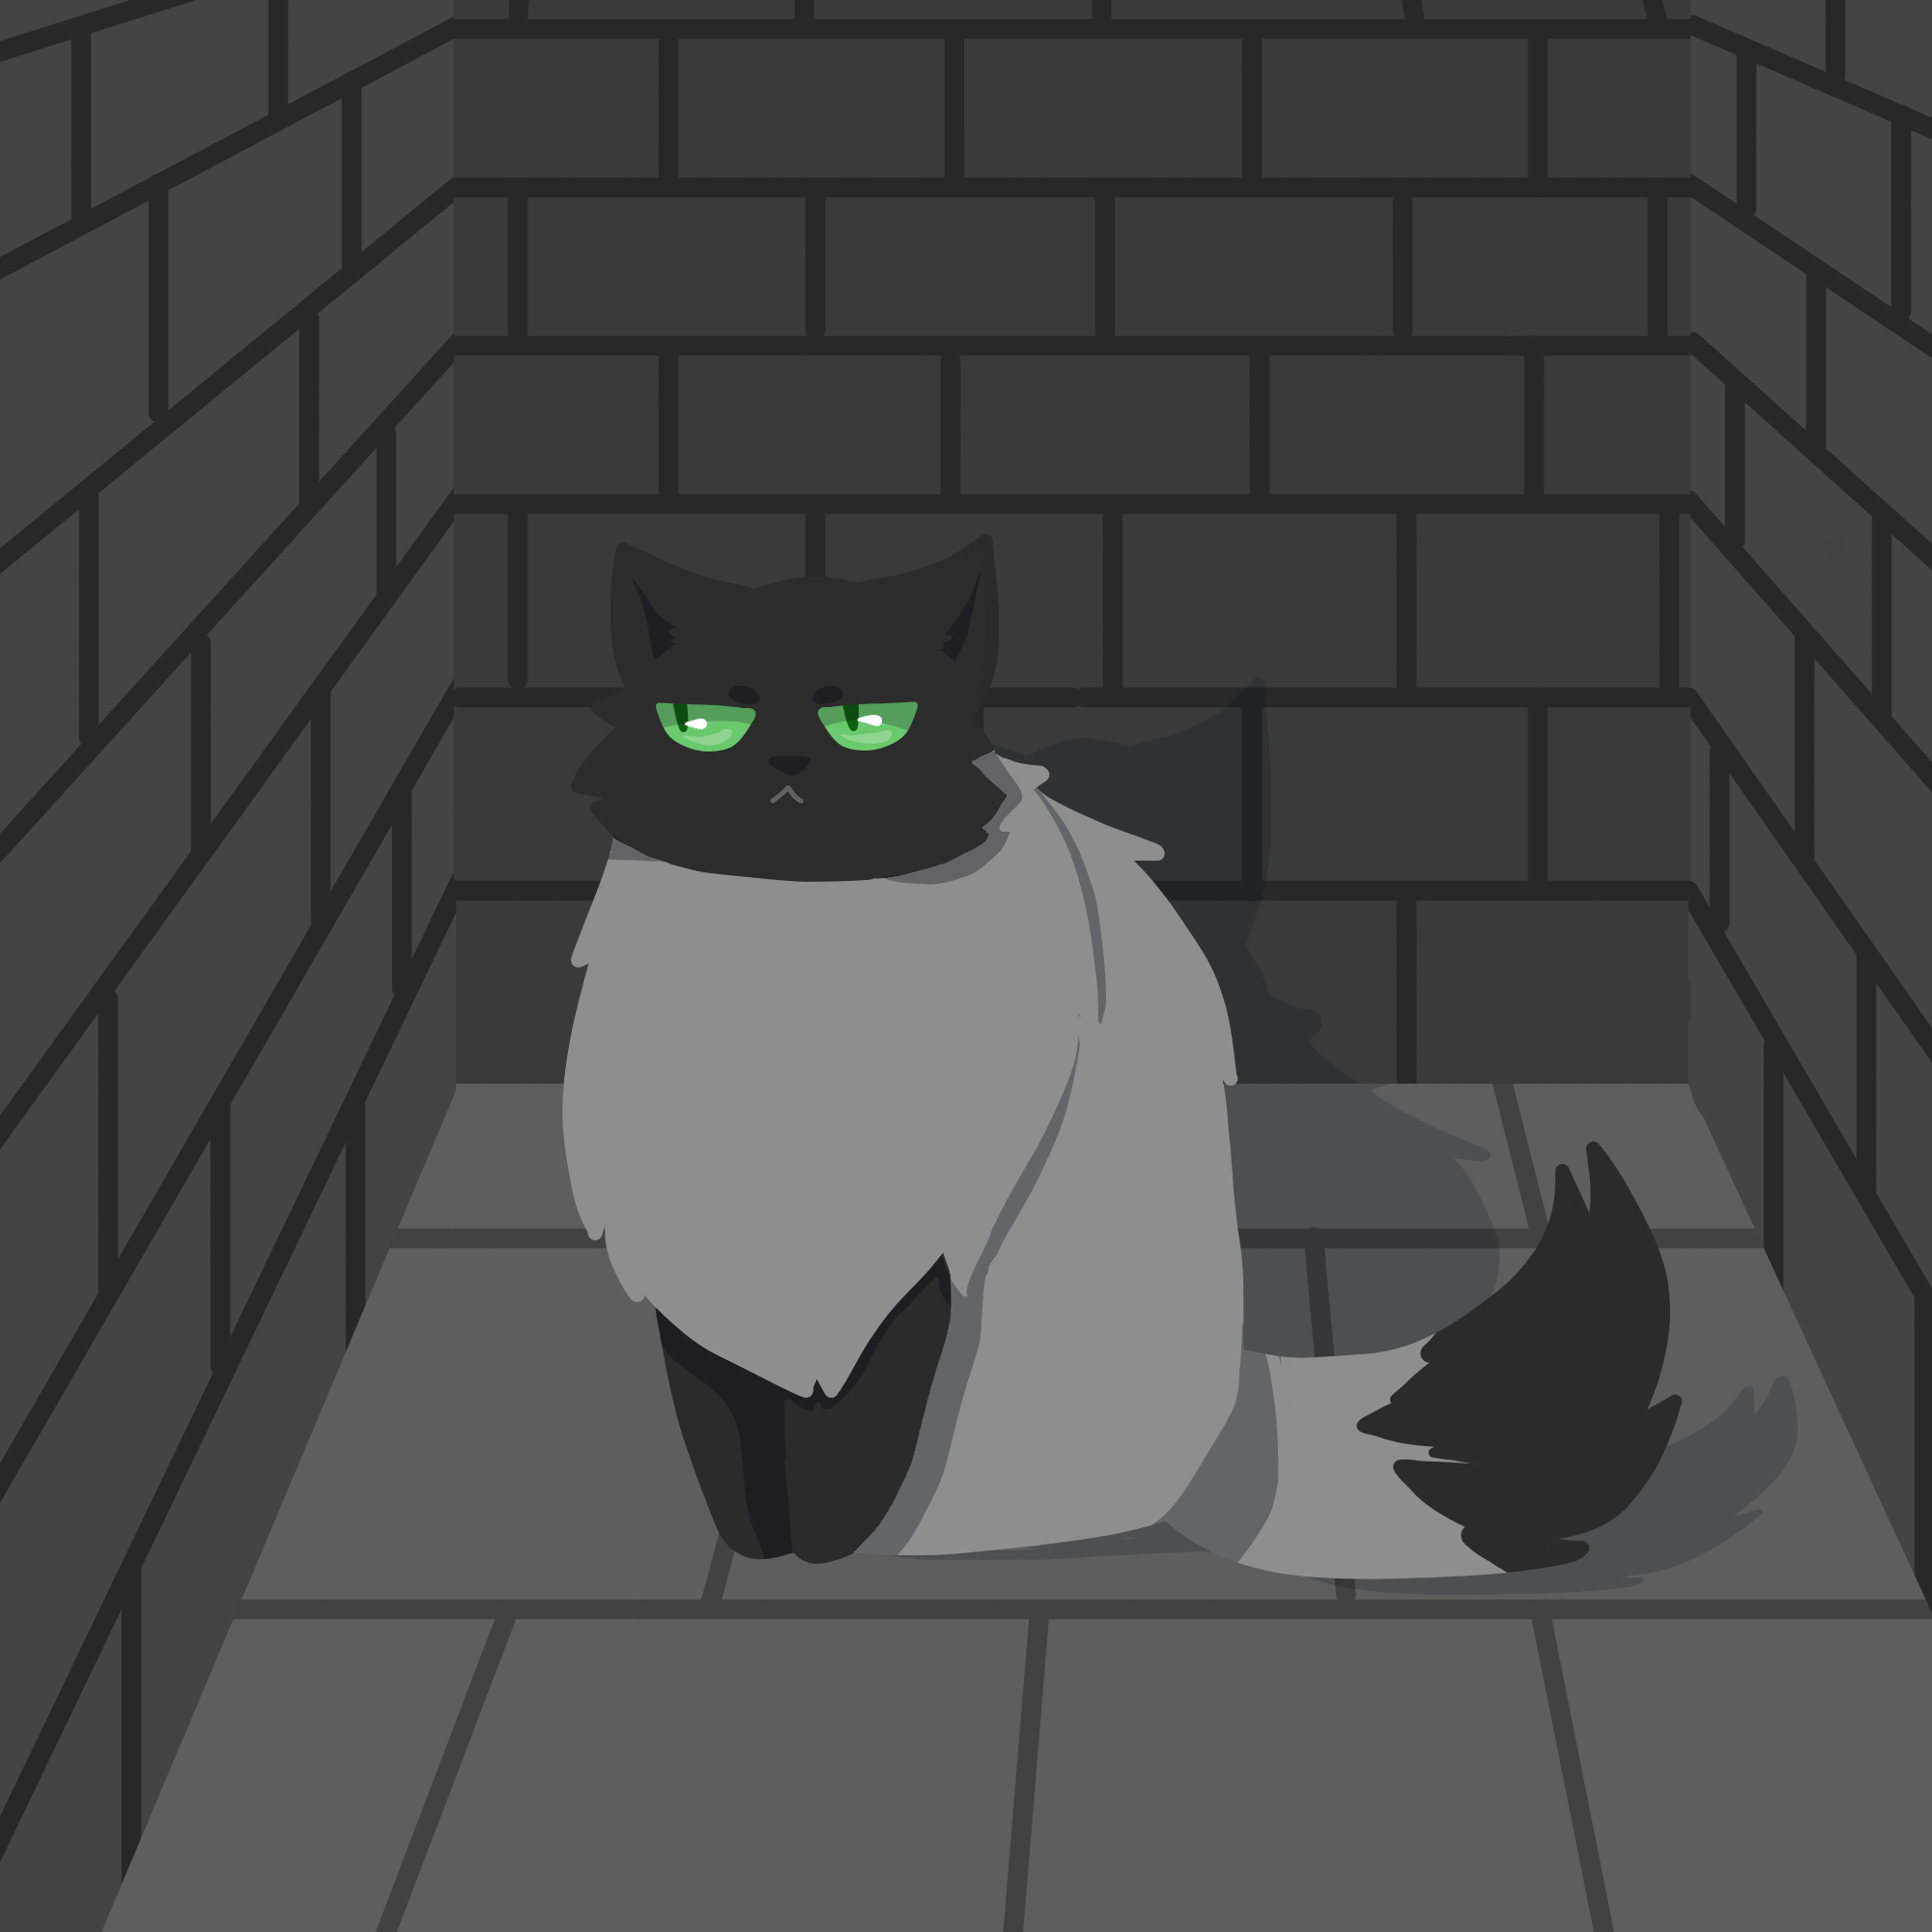 Cat in an alleyway